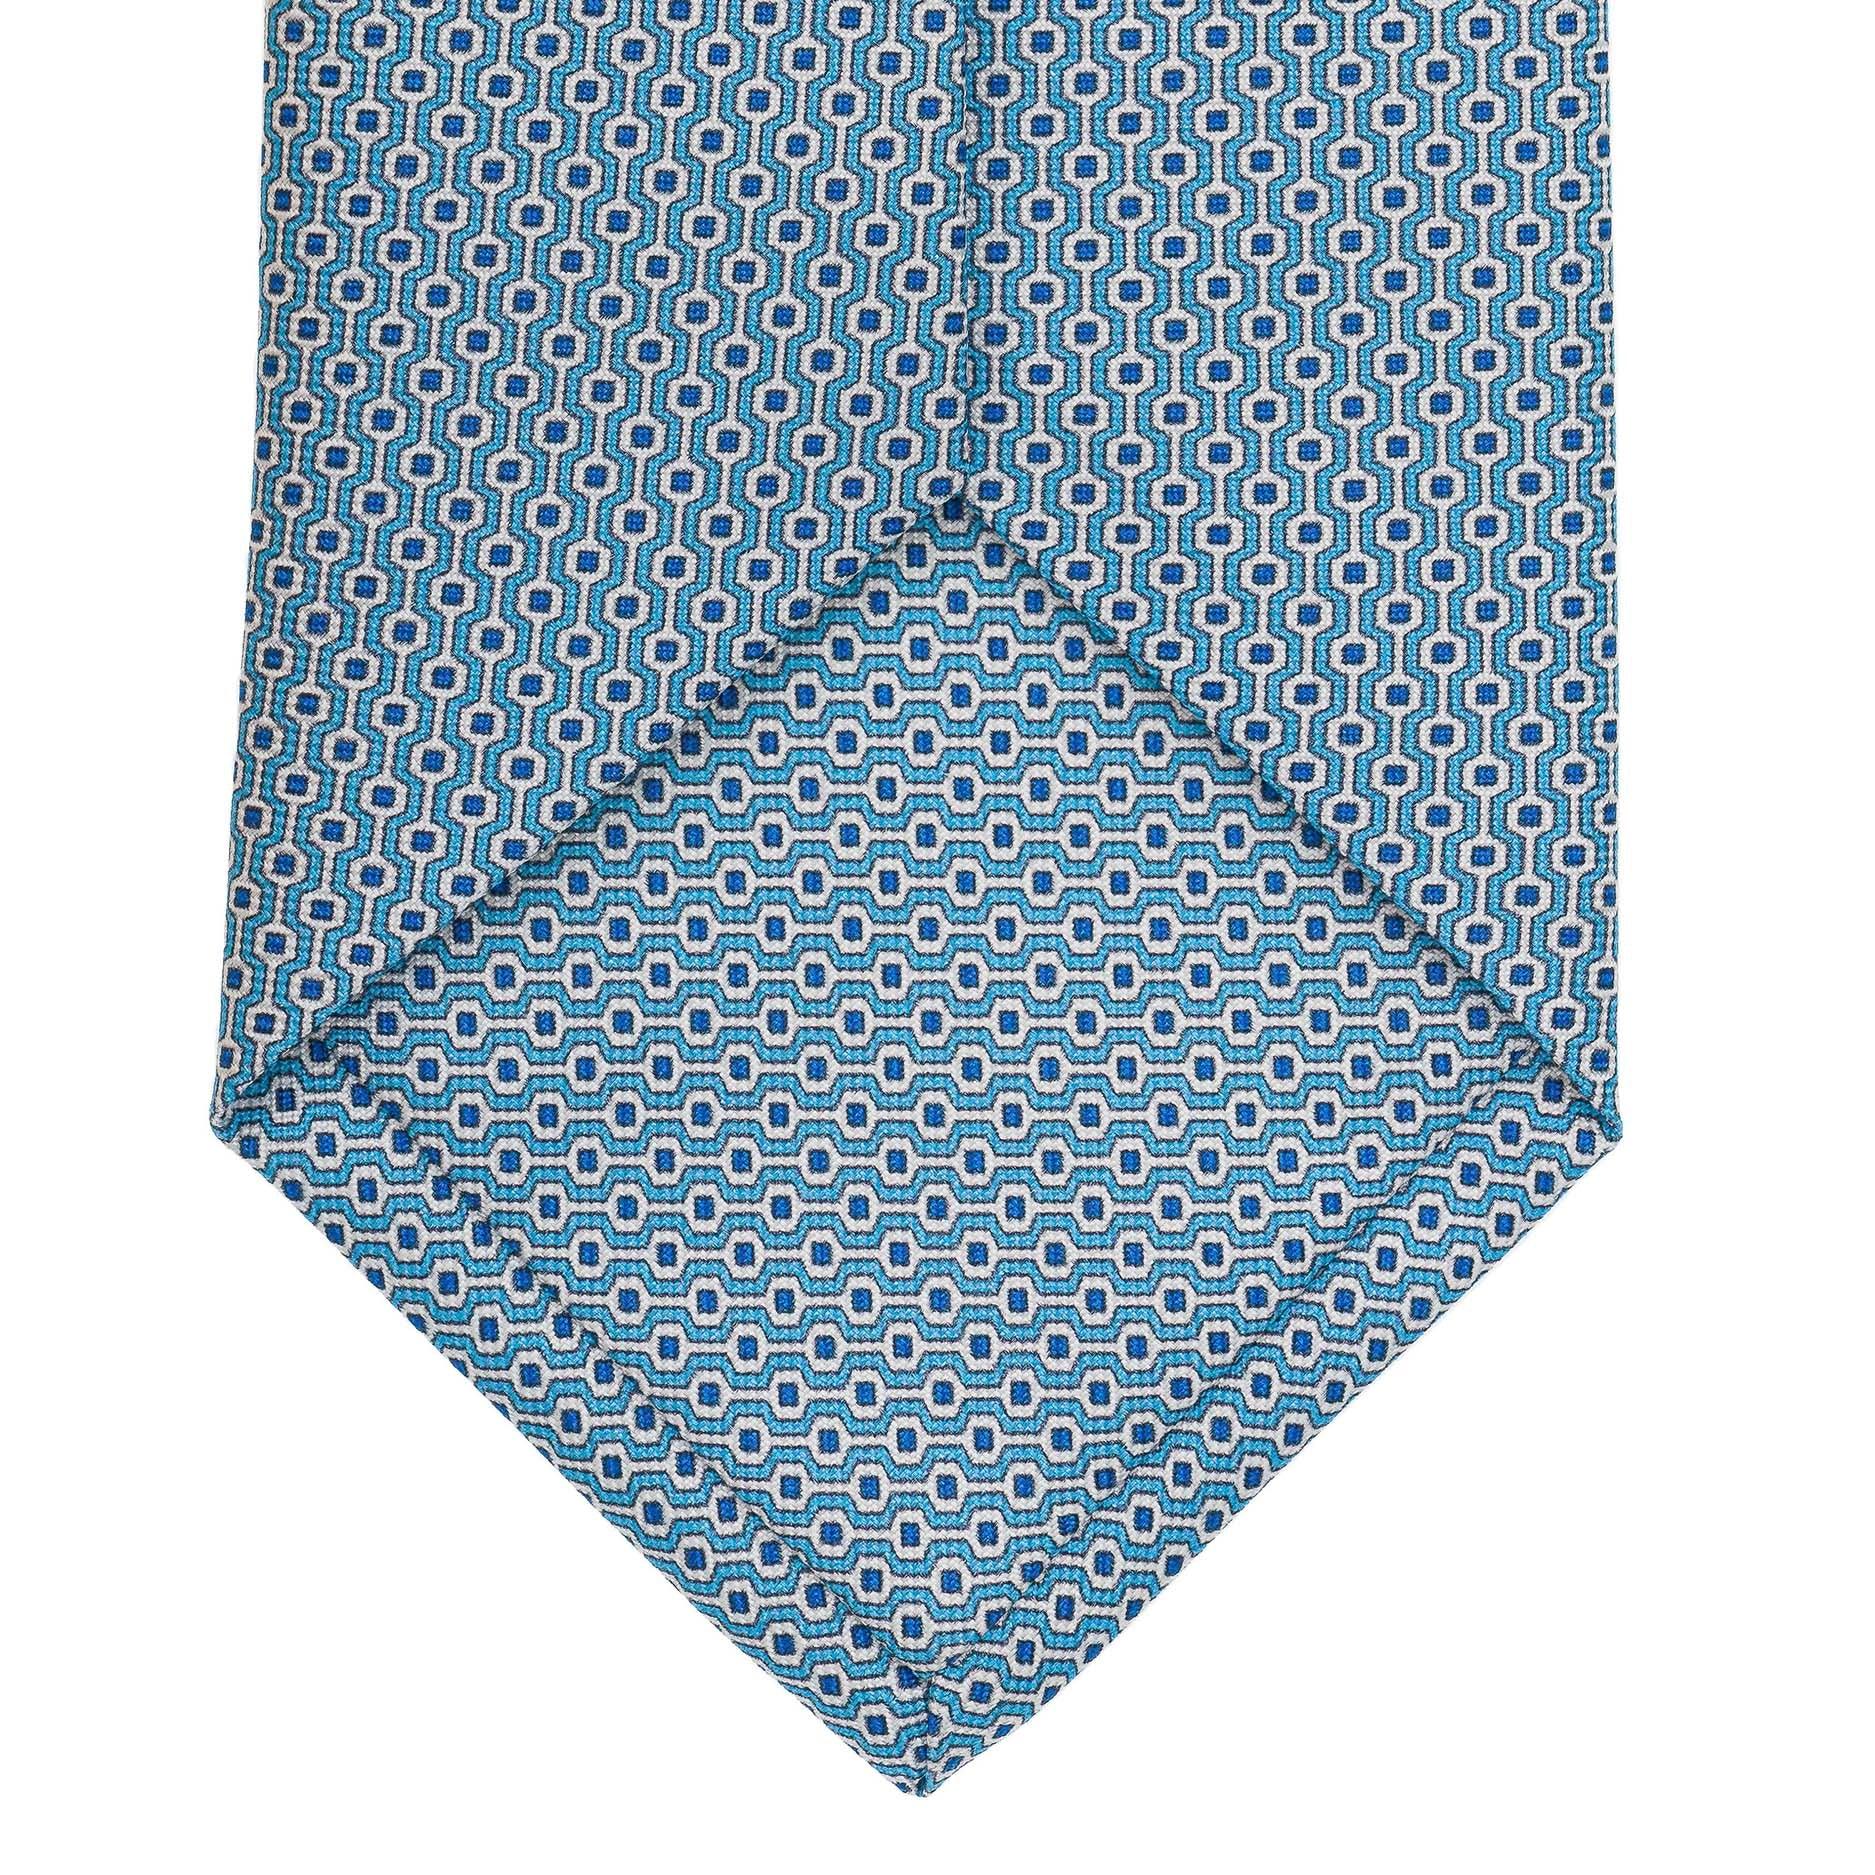 Cravatta 3 pieghe - TAL V2 - Talarico Cravatte